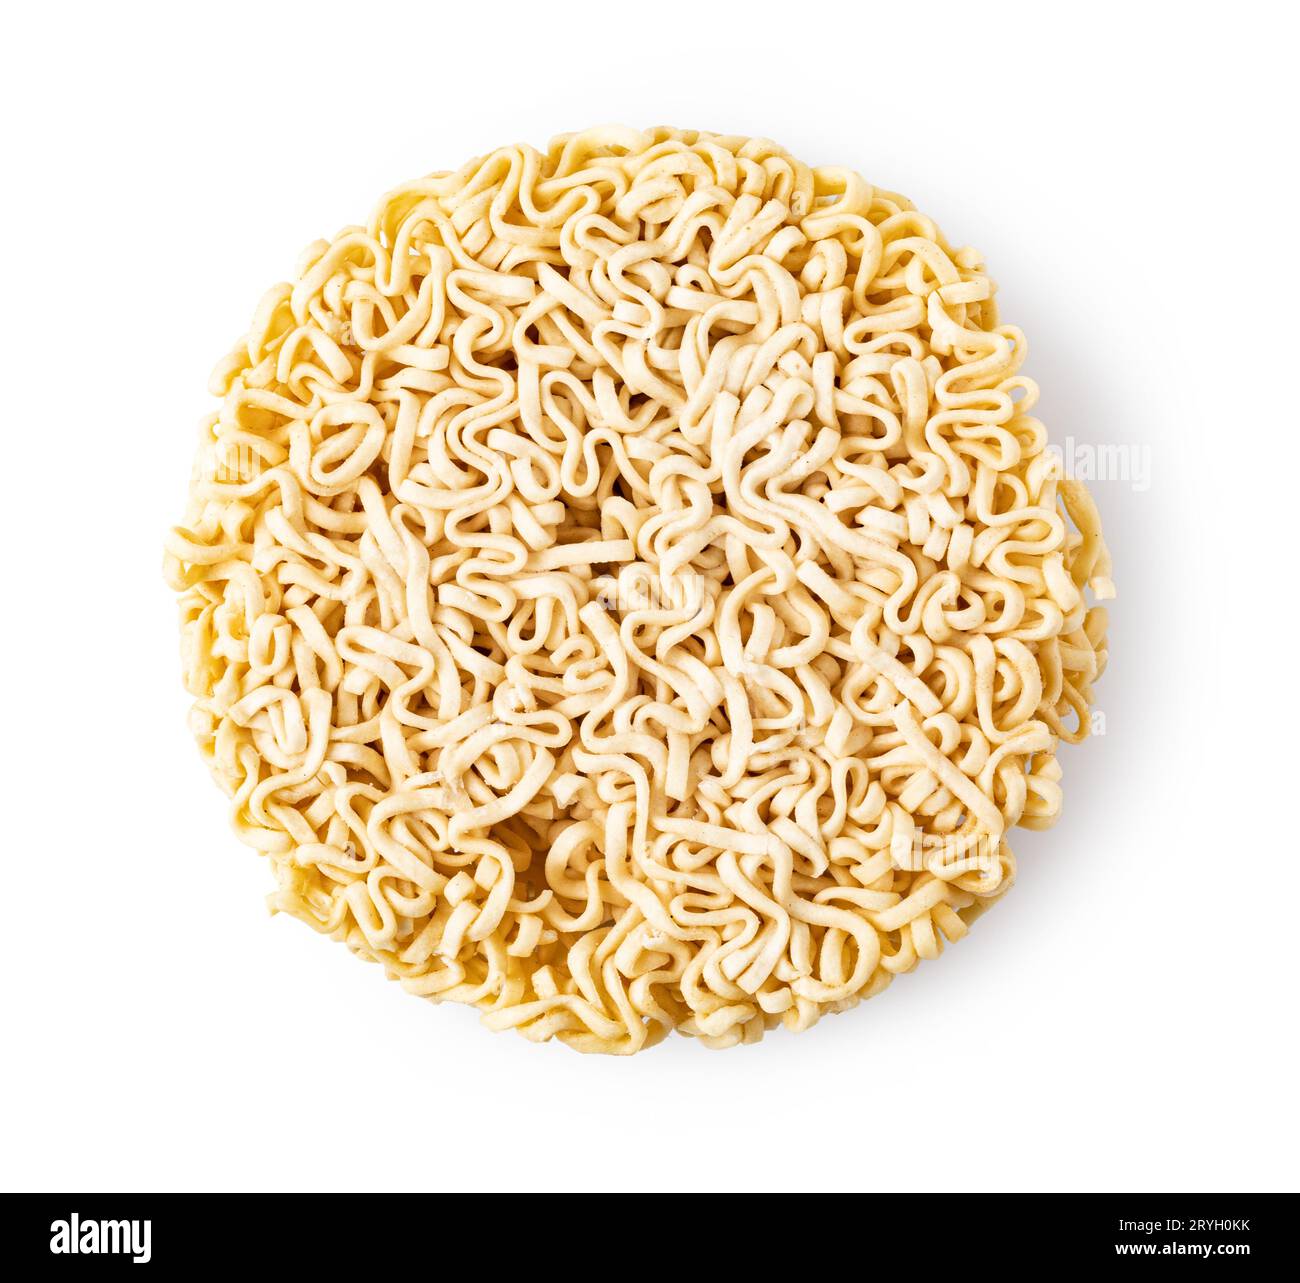 Instant noodles Stock Photo